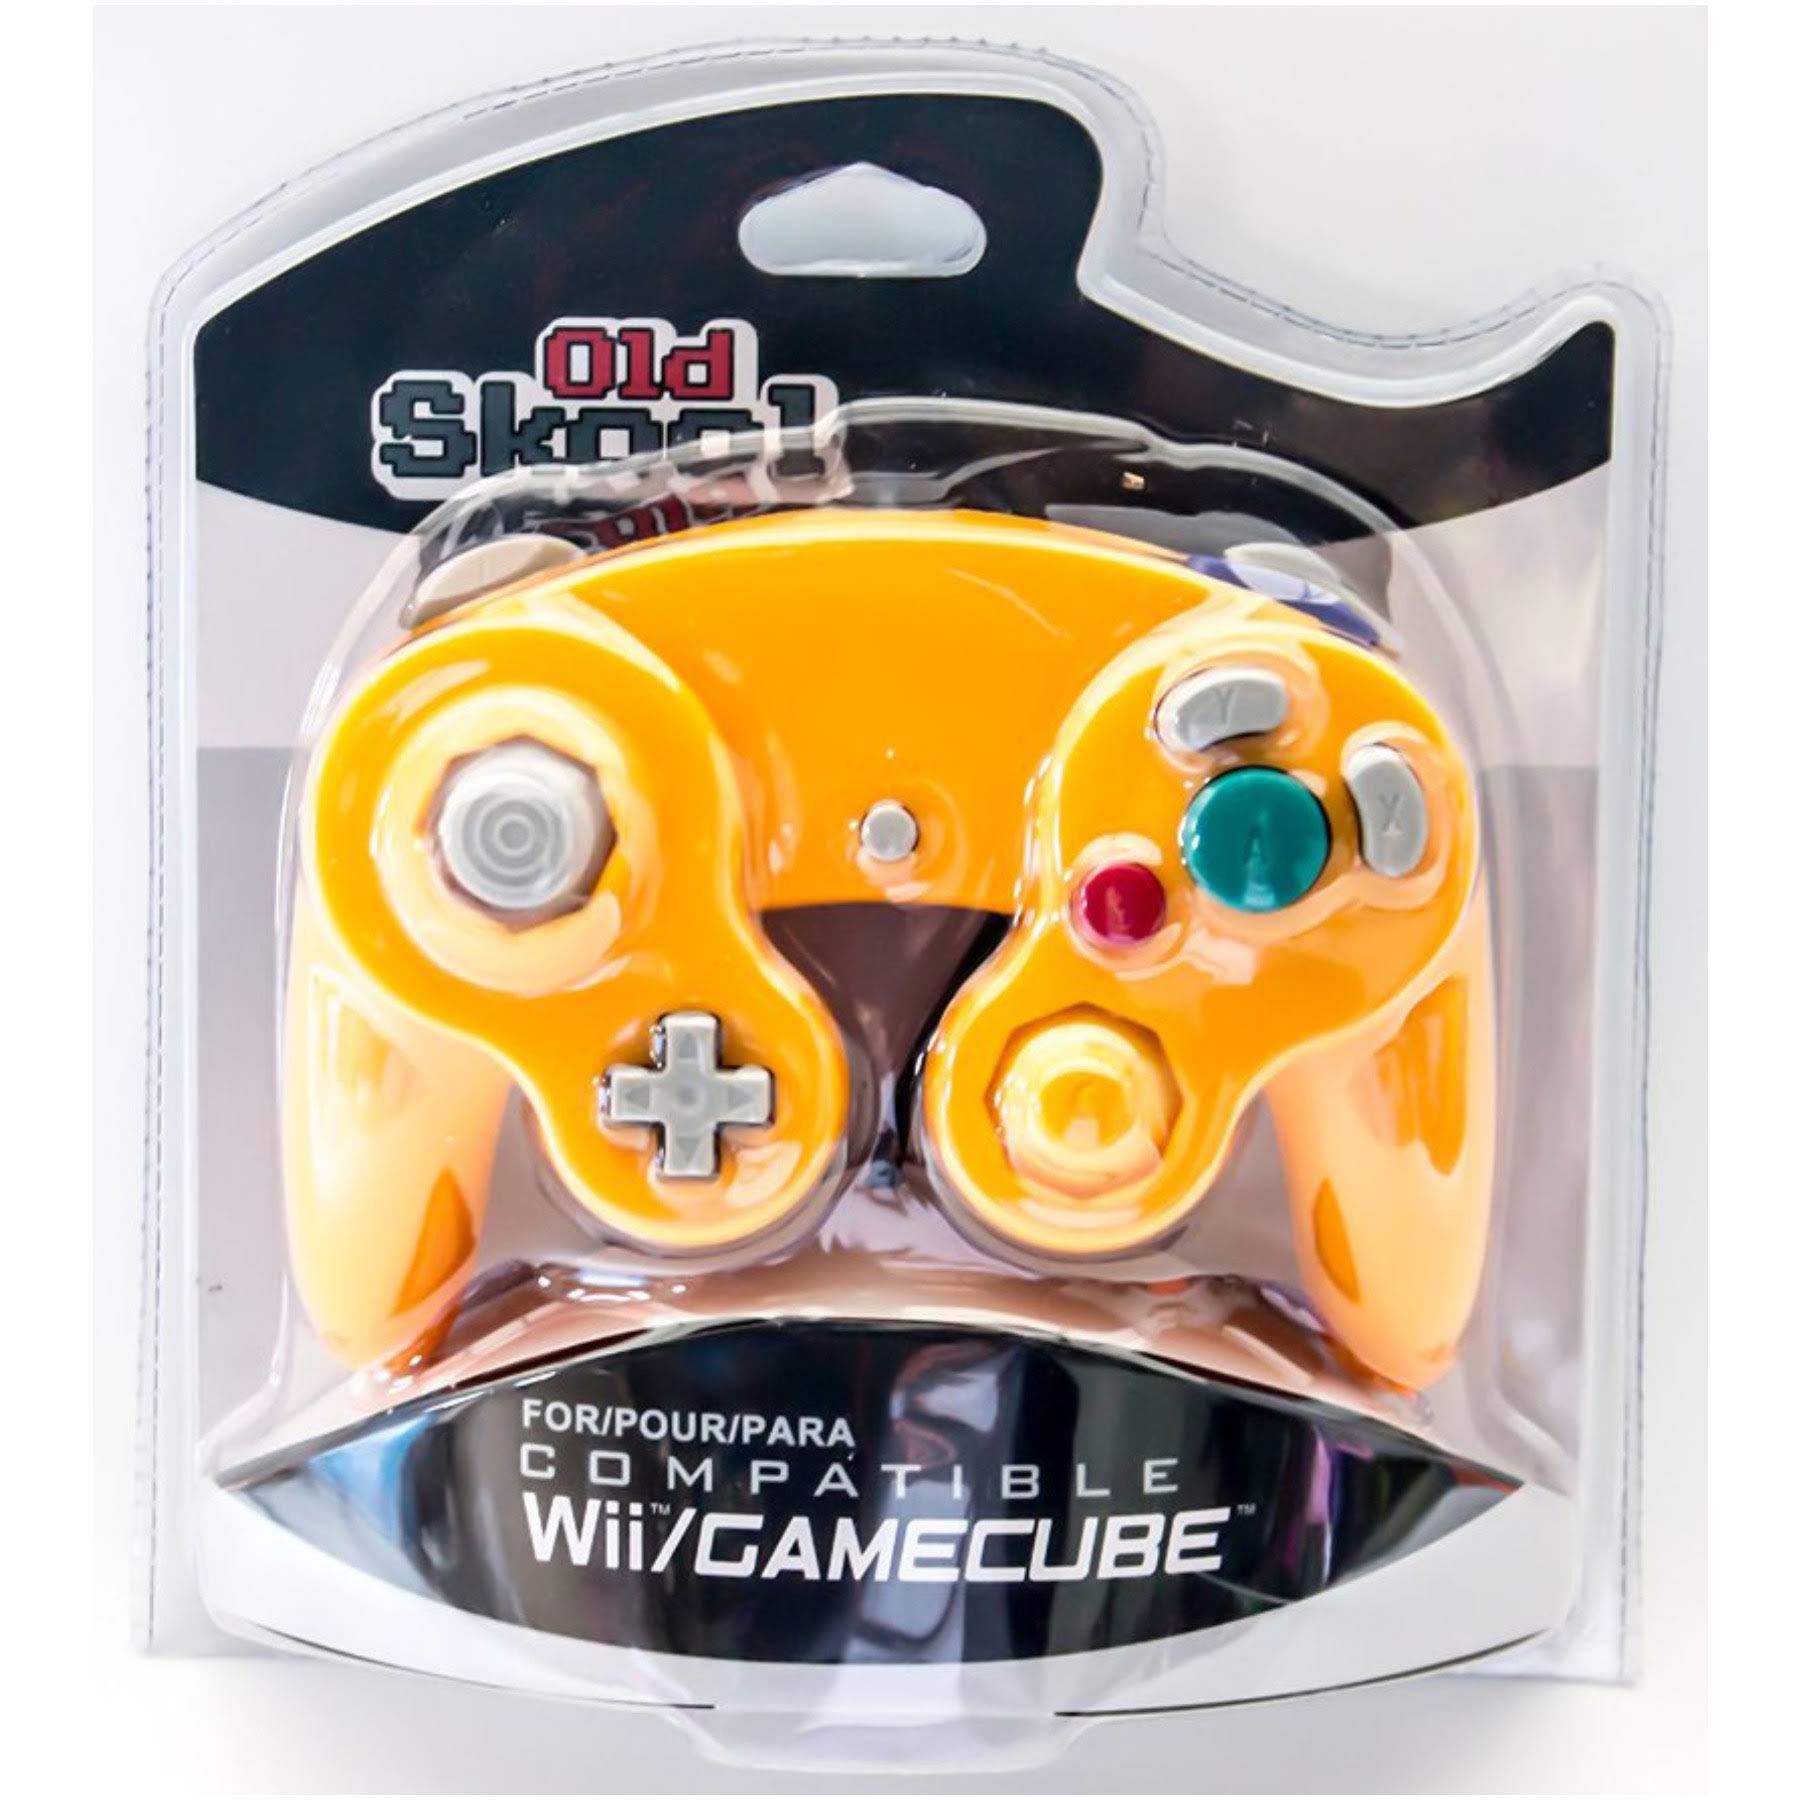 Old Skool Gamecube / Wii Compatible Controller - Orange (Spice)